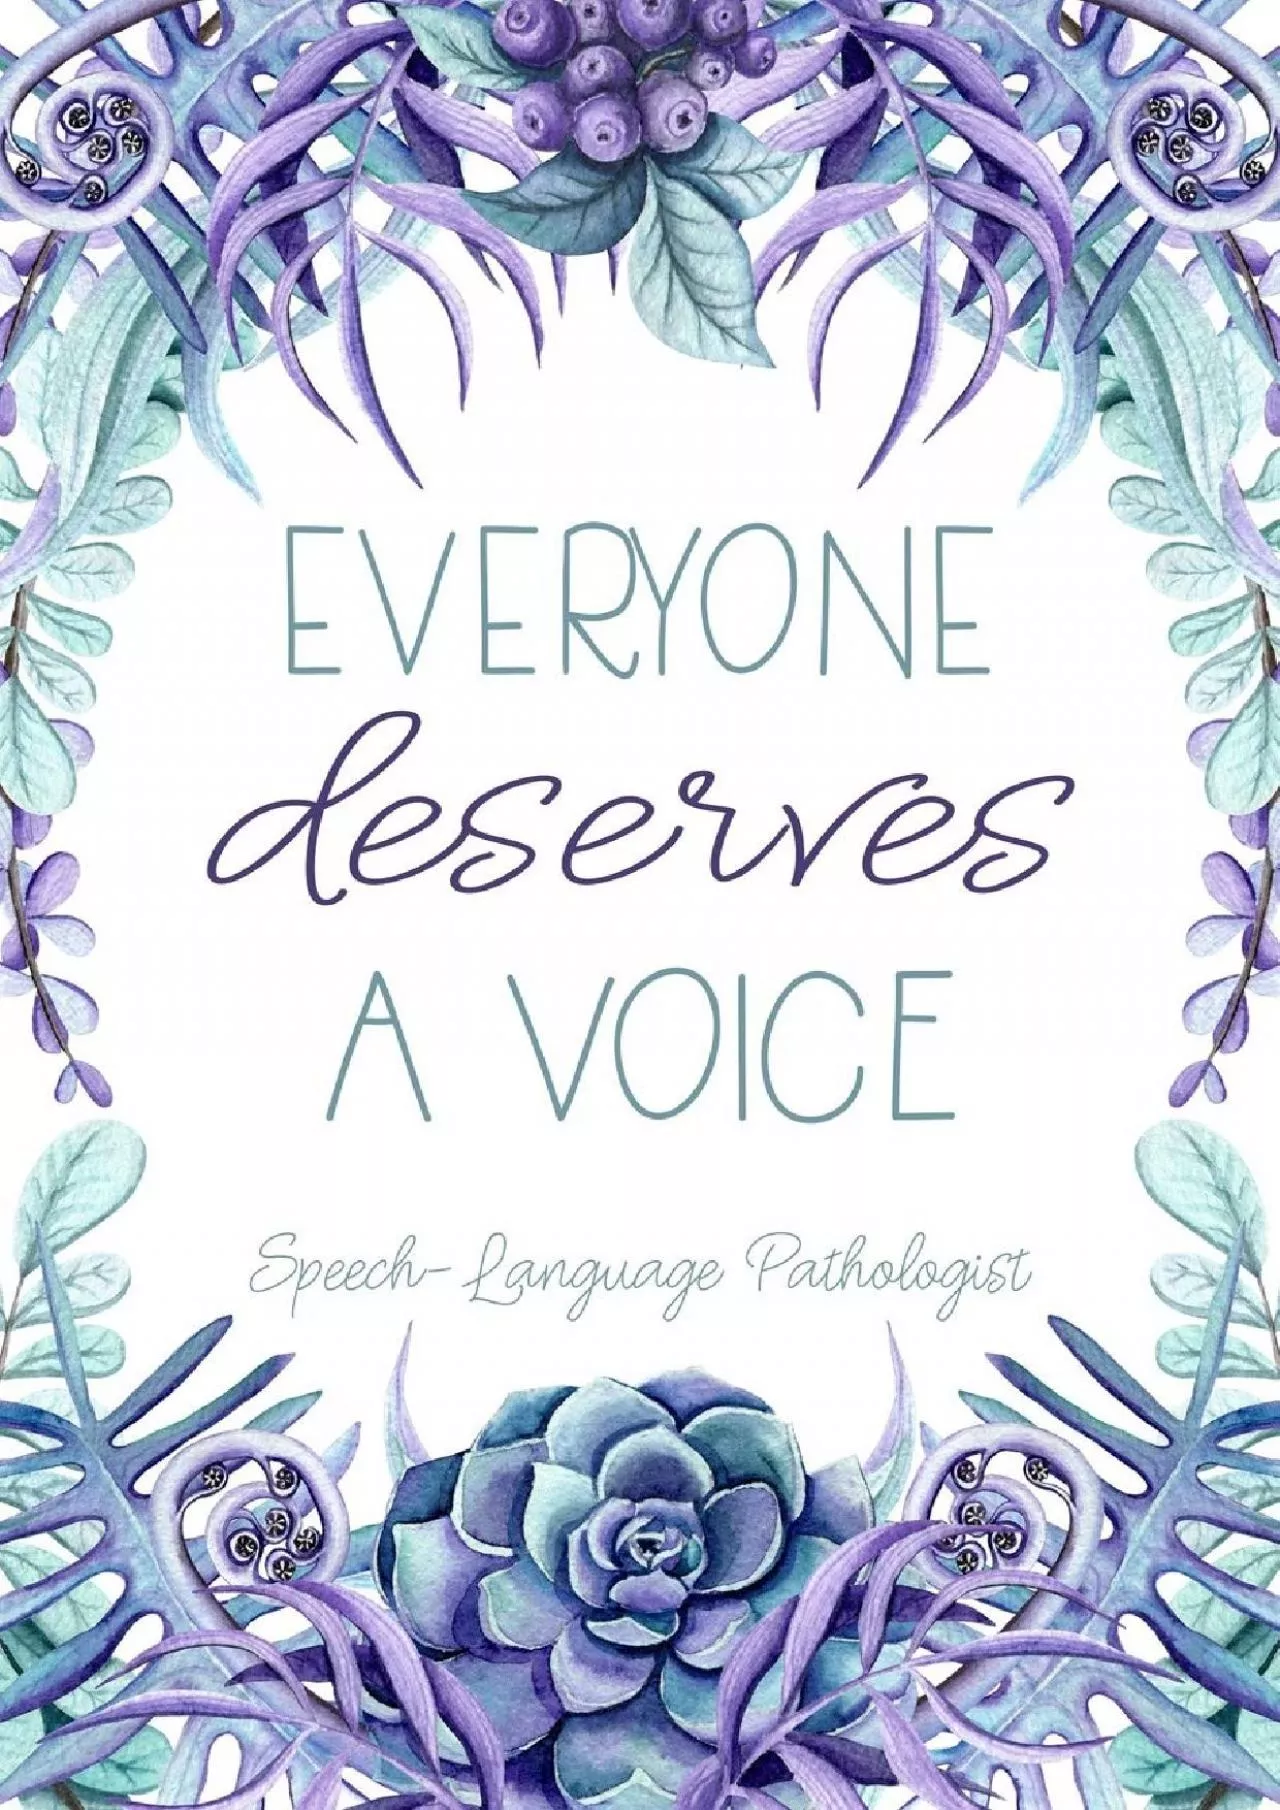 (BOOK)-Everyone Deserves A Voice Speech-Language Pathologist: Speech Therapist Gifts -